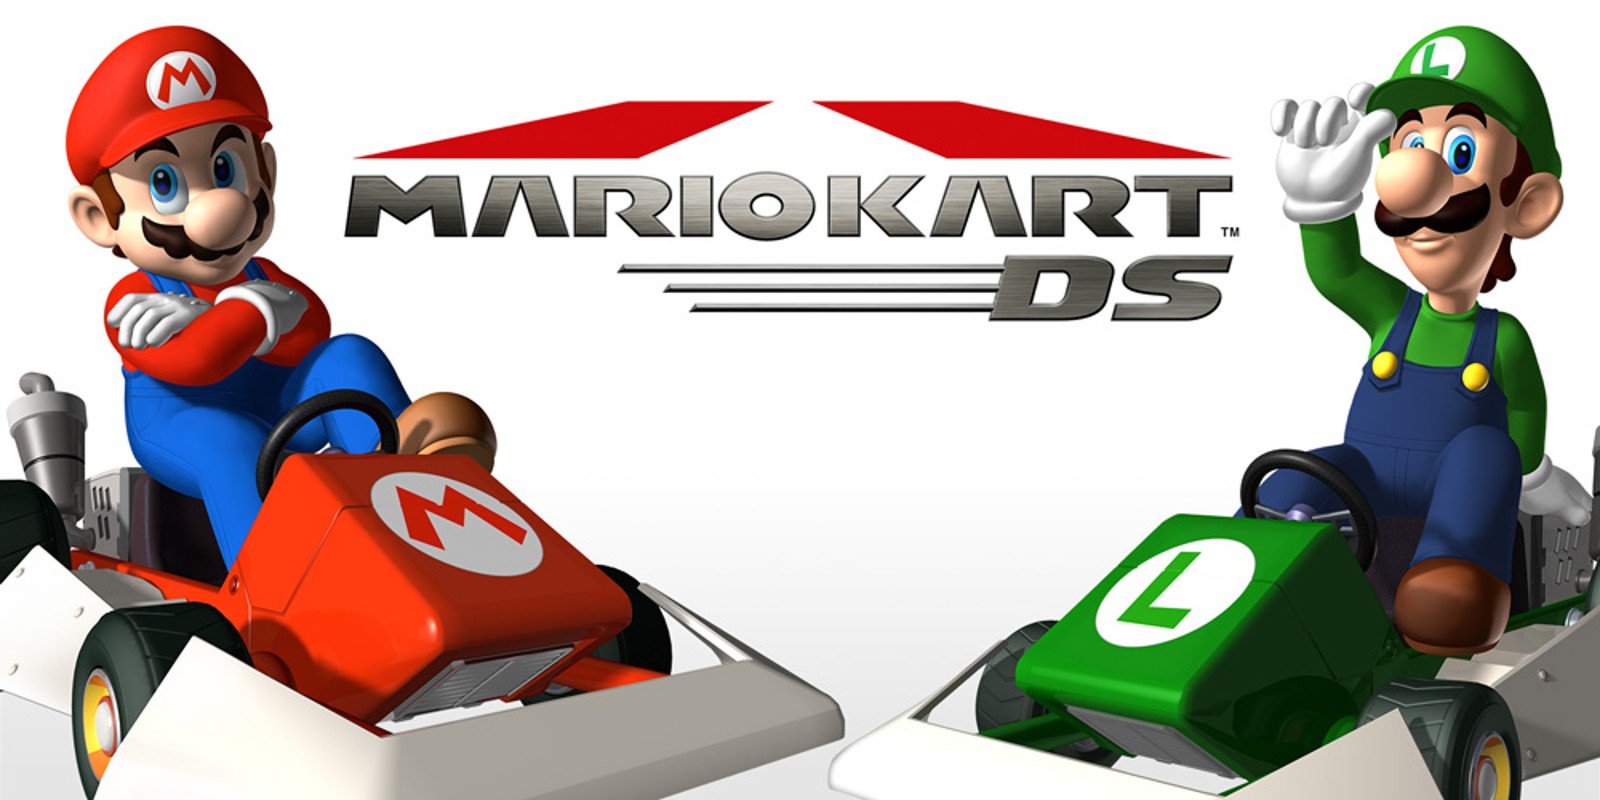 MARIO KART DS PS5 Version Full Game Free Download